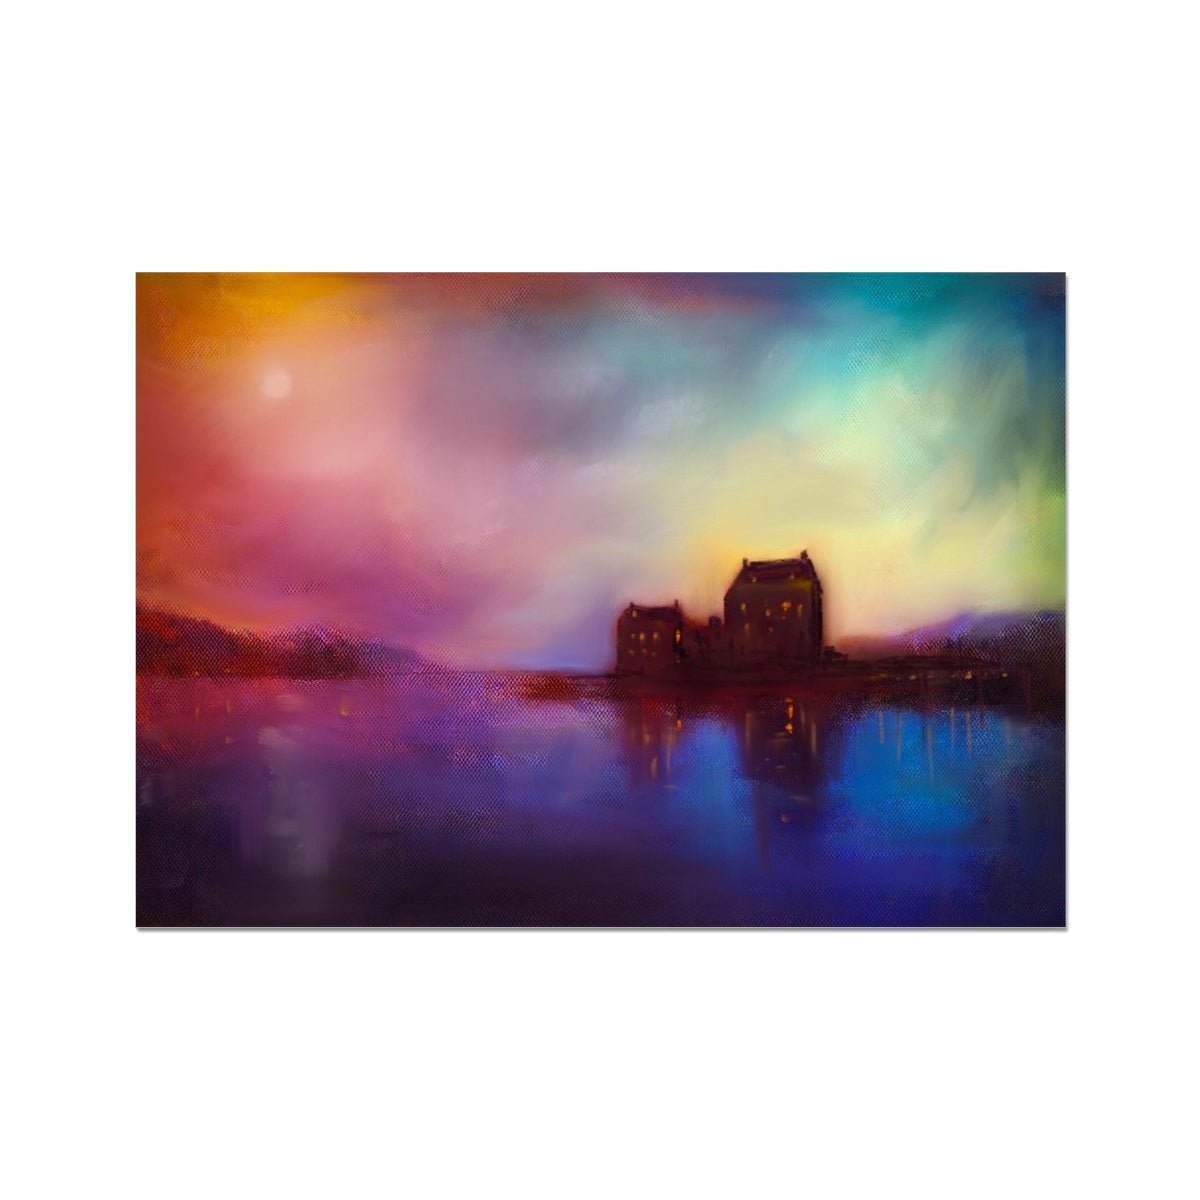 Eilean Donan Castle Sunset Painting | Fine Art Prints From Scotland-Unframed Prints-Historic & Iconic Scotland Art Gallery-A2 Landscape-Paintings, Prints, Homeware, Art Gifts From Scotland By Scottish Artist Kevin Hunter